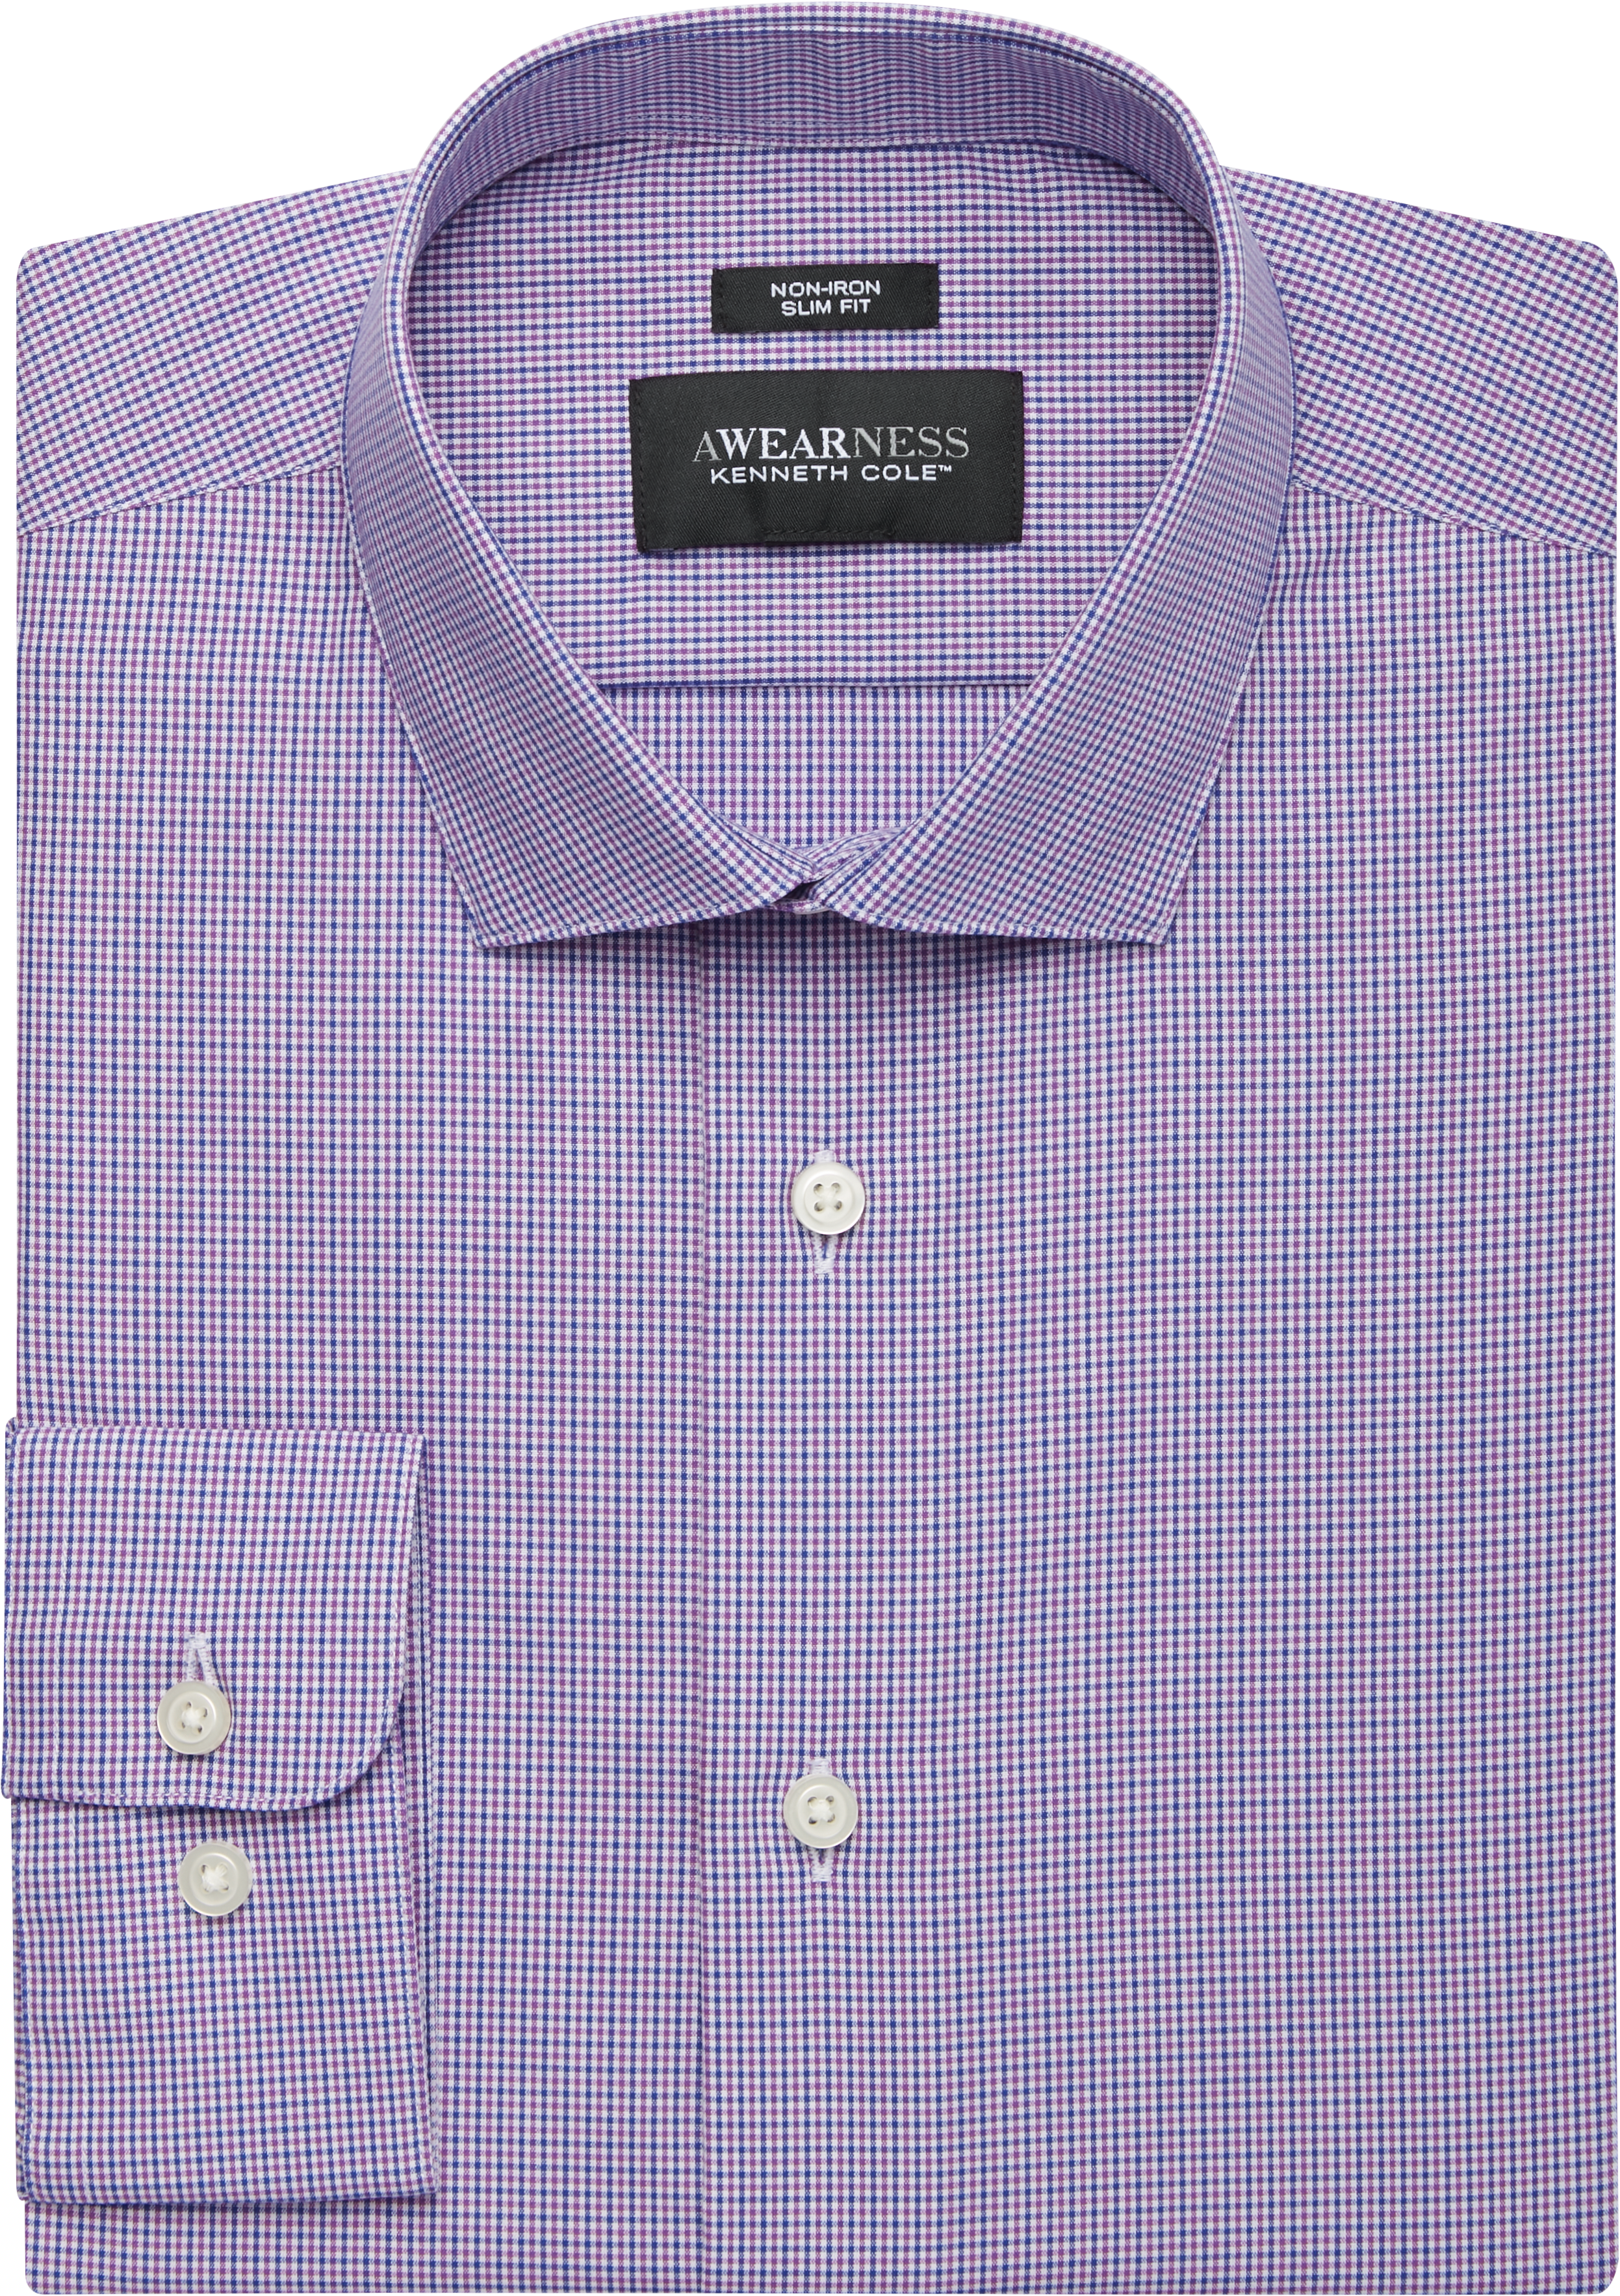 Awearness Kenneth Cole Purple Plaid Slim Fit Dress Shirt - Men's Sale ...